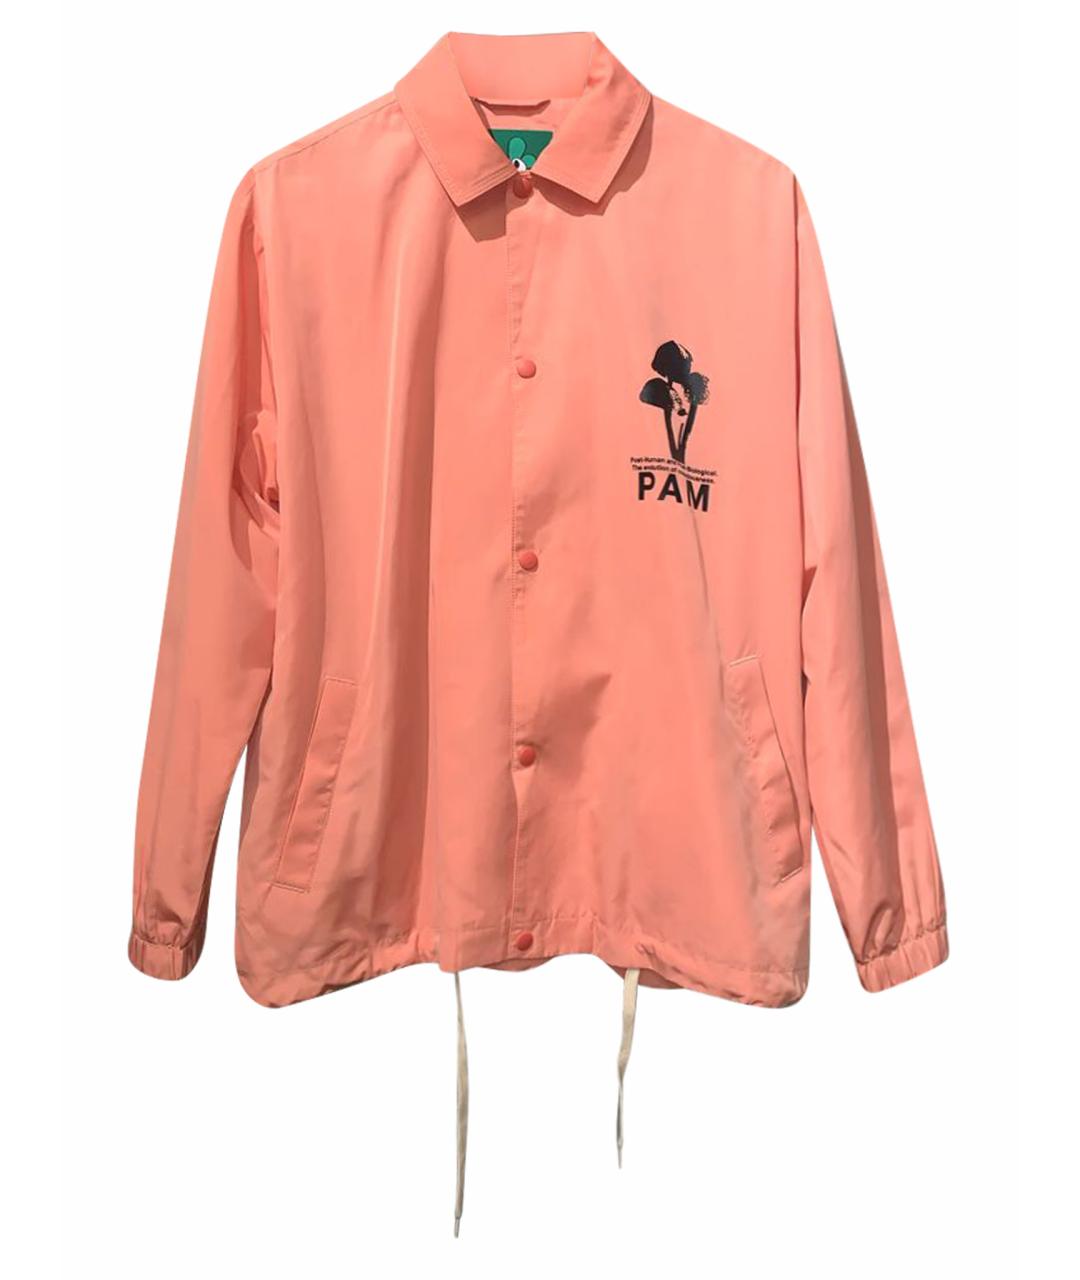 Perks and Mini Оранжевая полиэстеровая куртка, фото 1